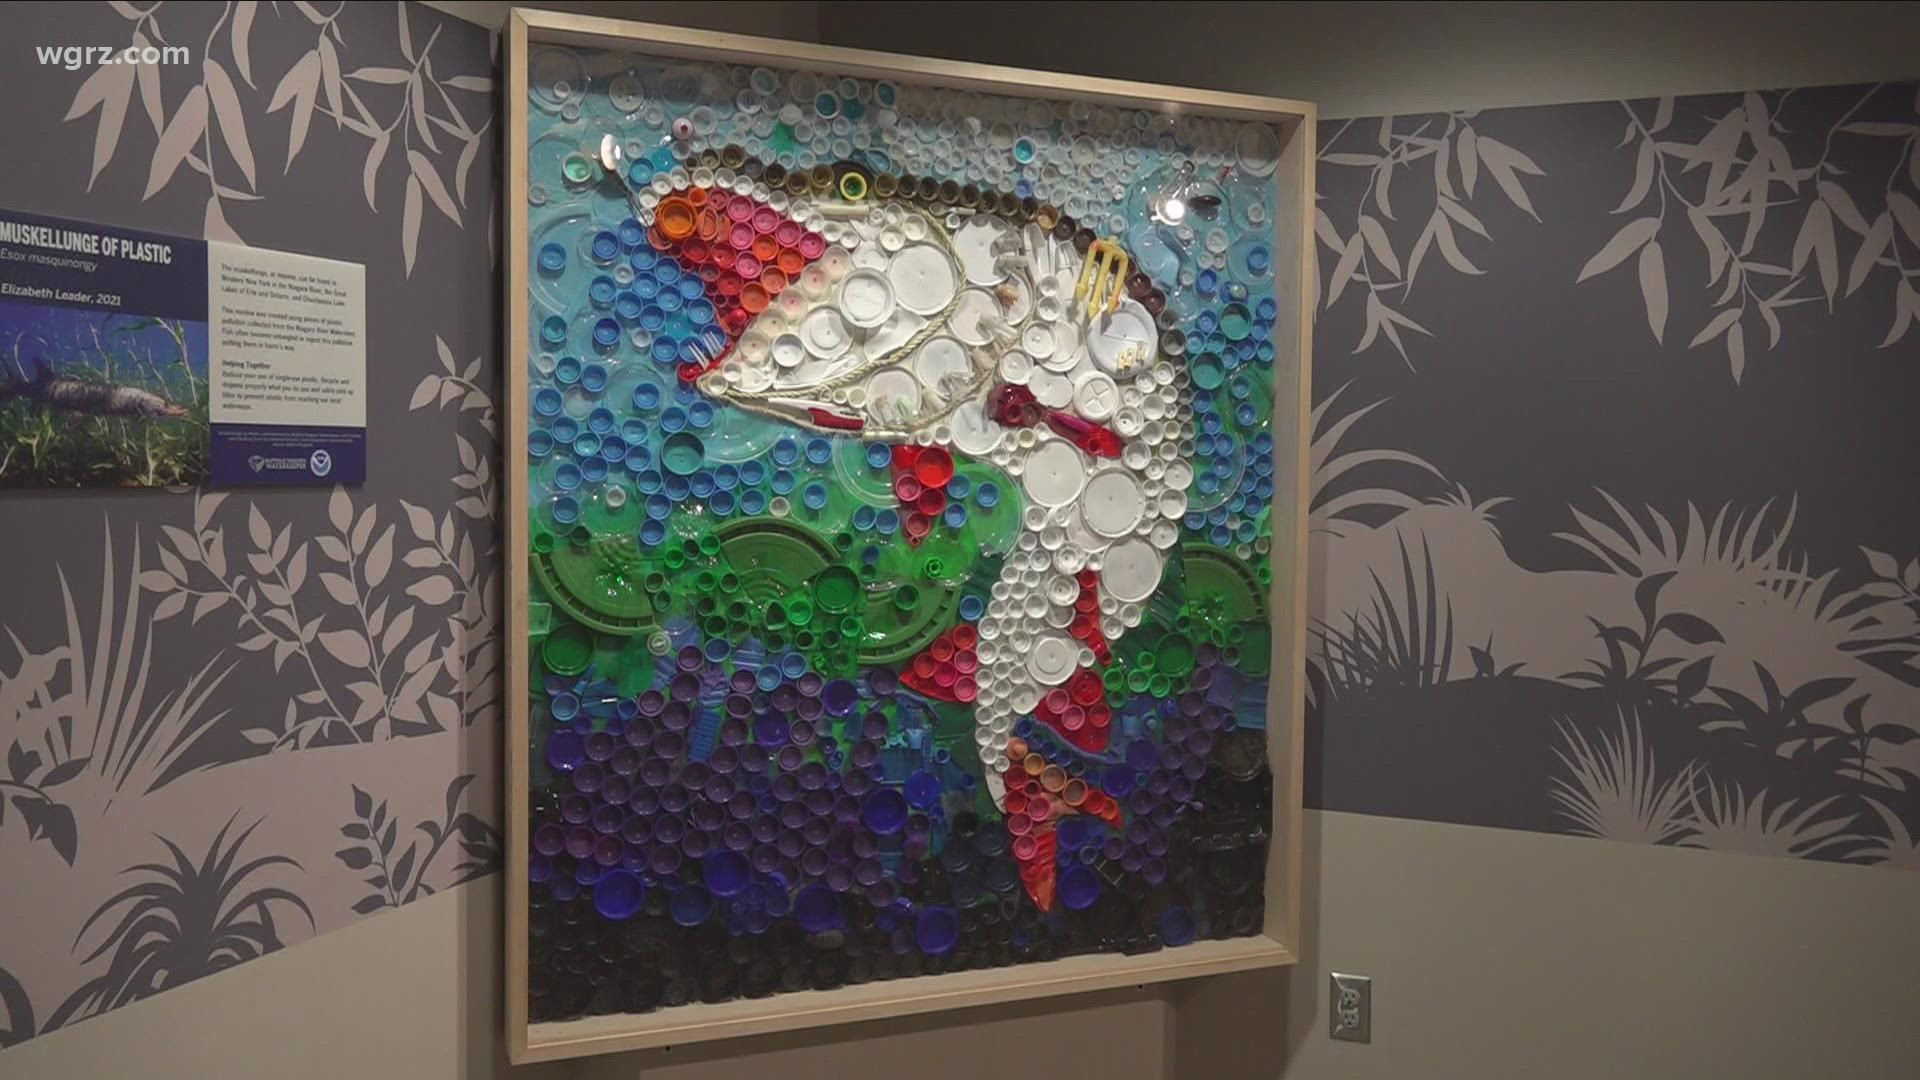 Most Buffalo: 'Danger of plastic pollution through art'